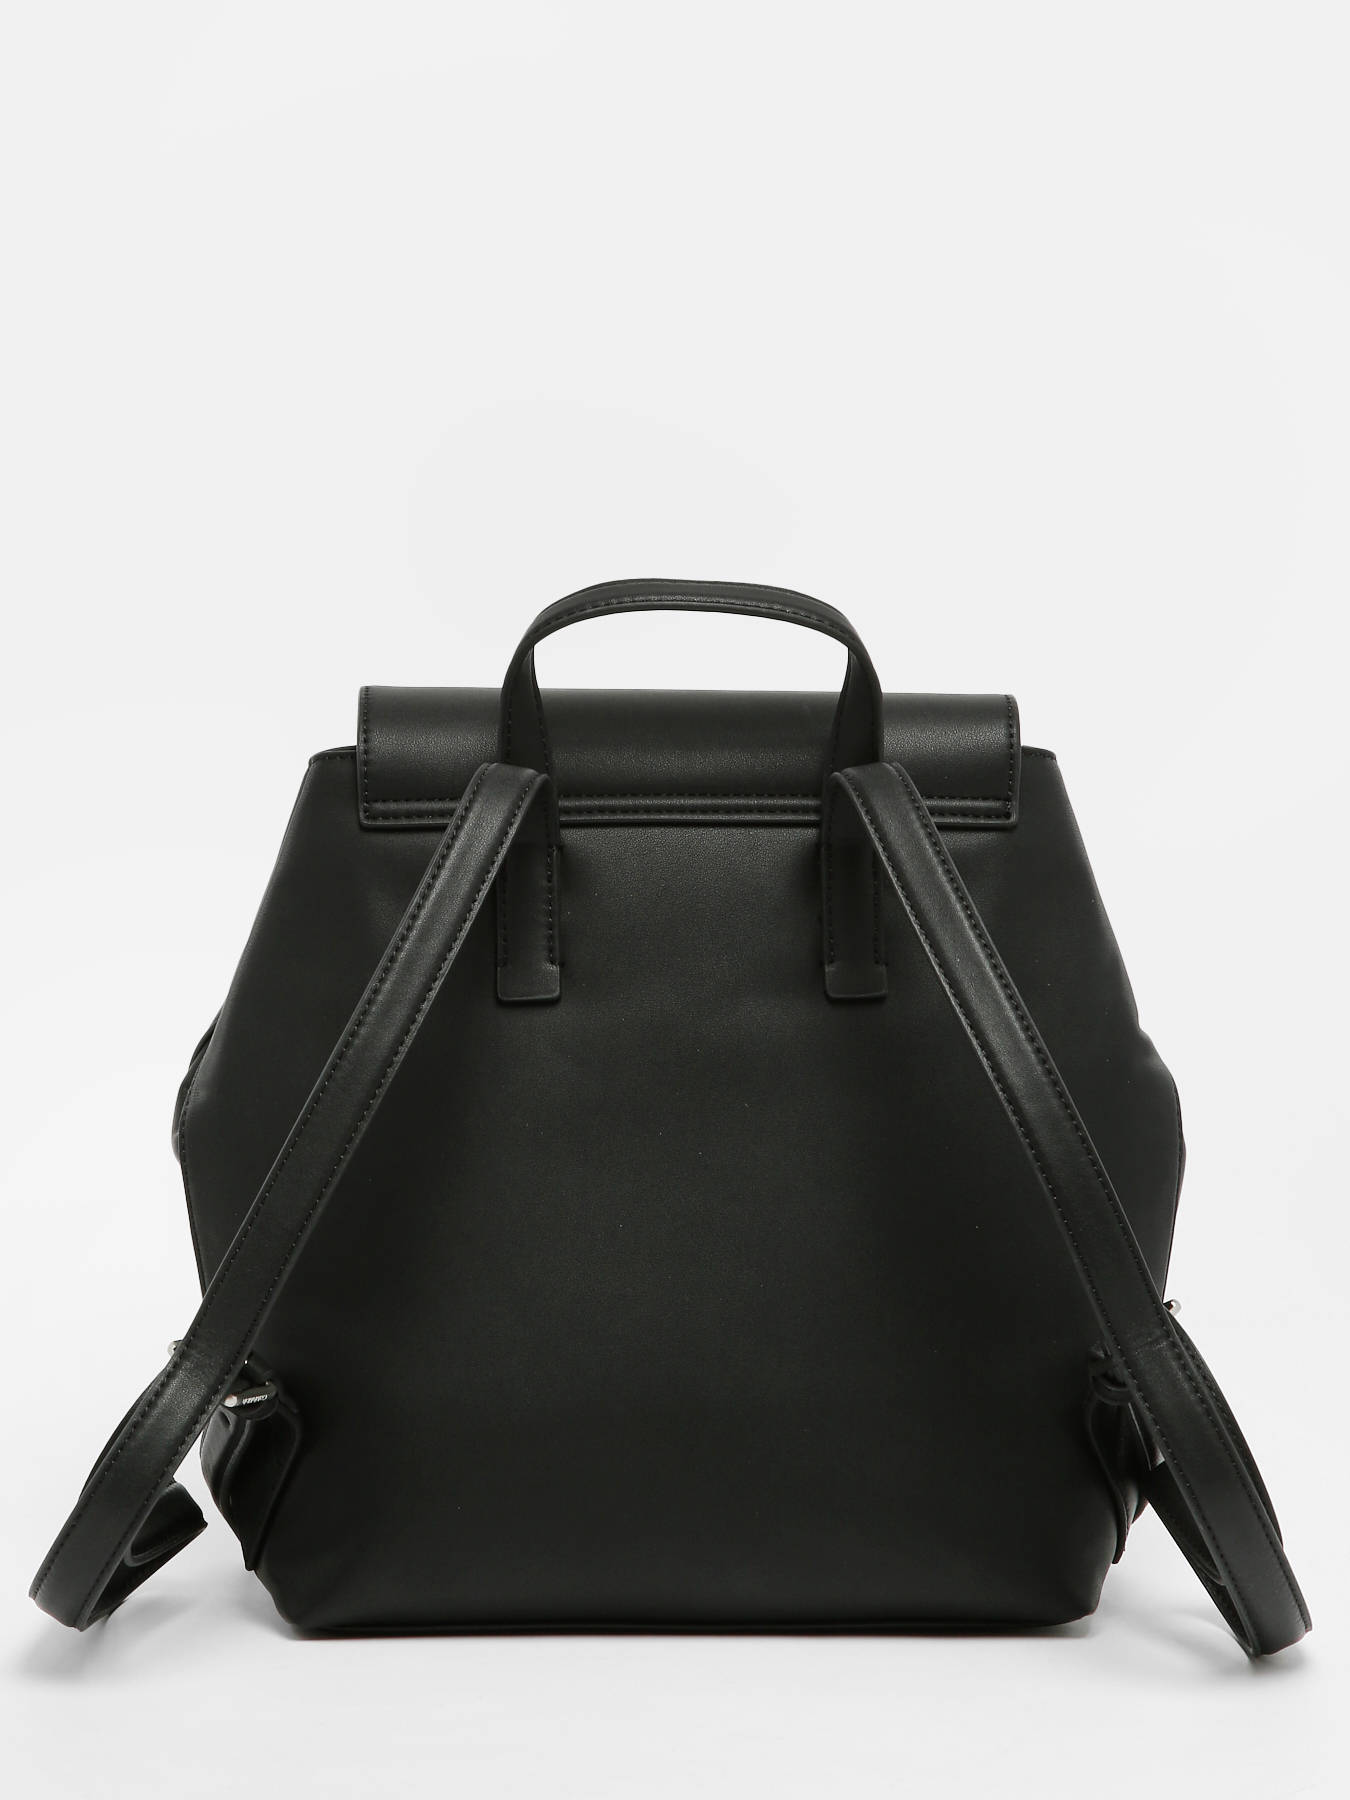 Denim and Leather Backpack Women - LeBaroudeur Denim